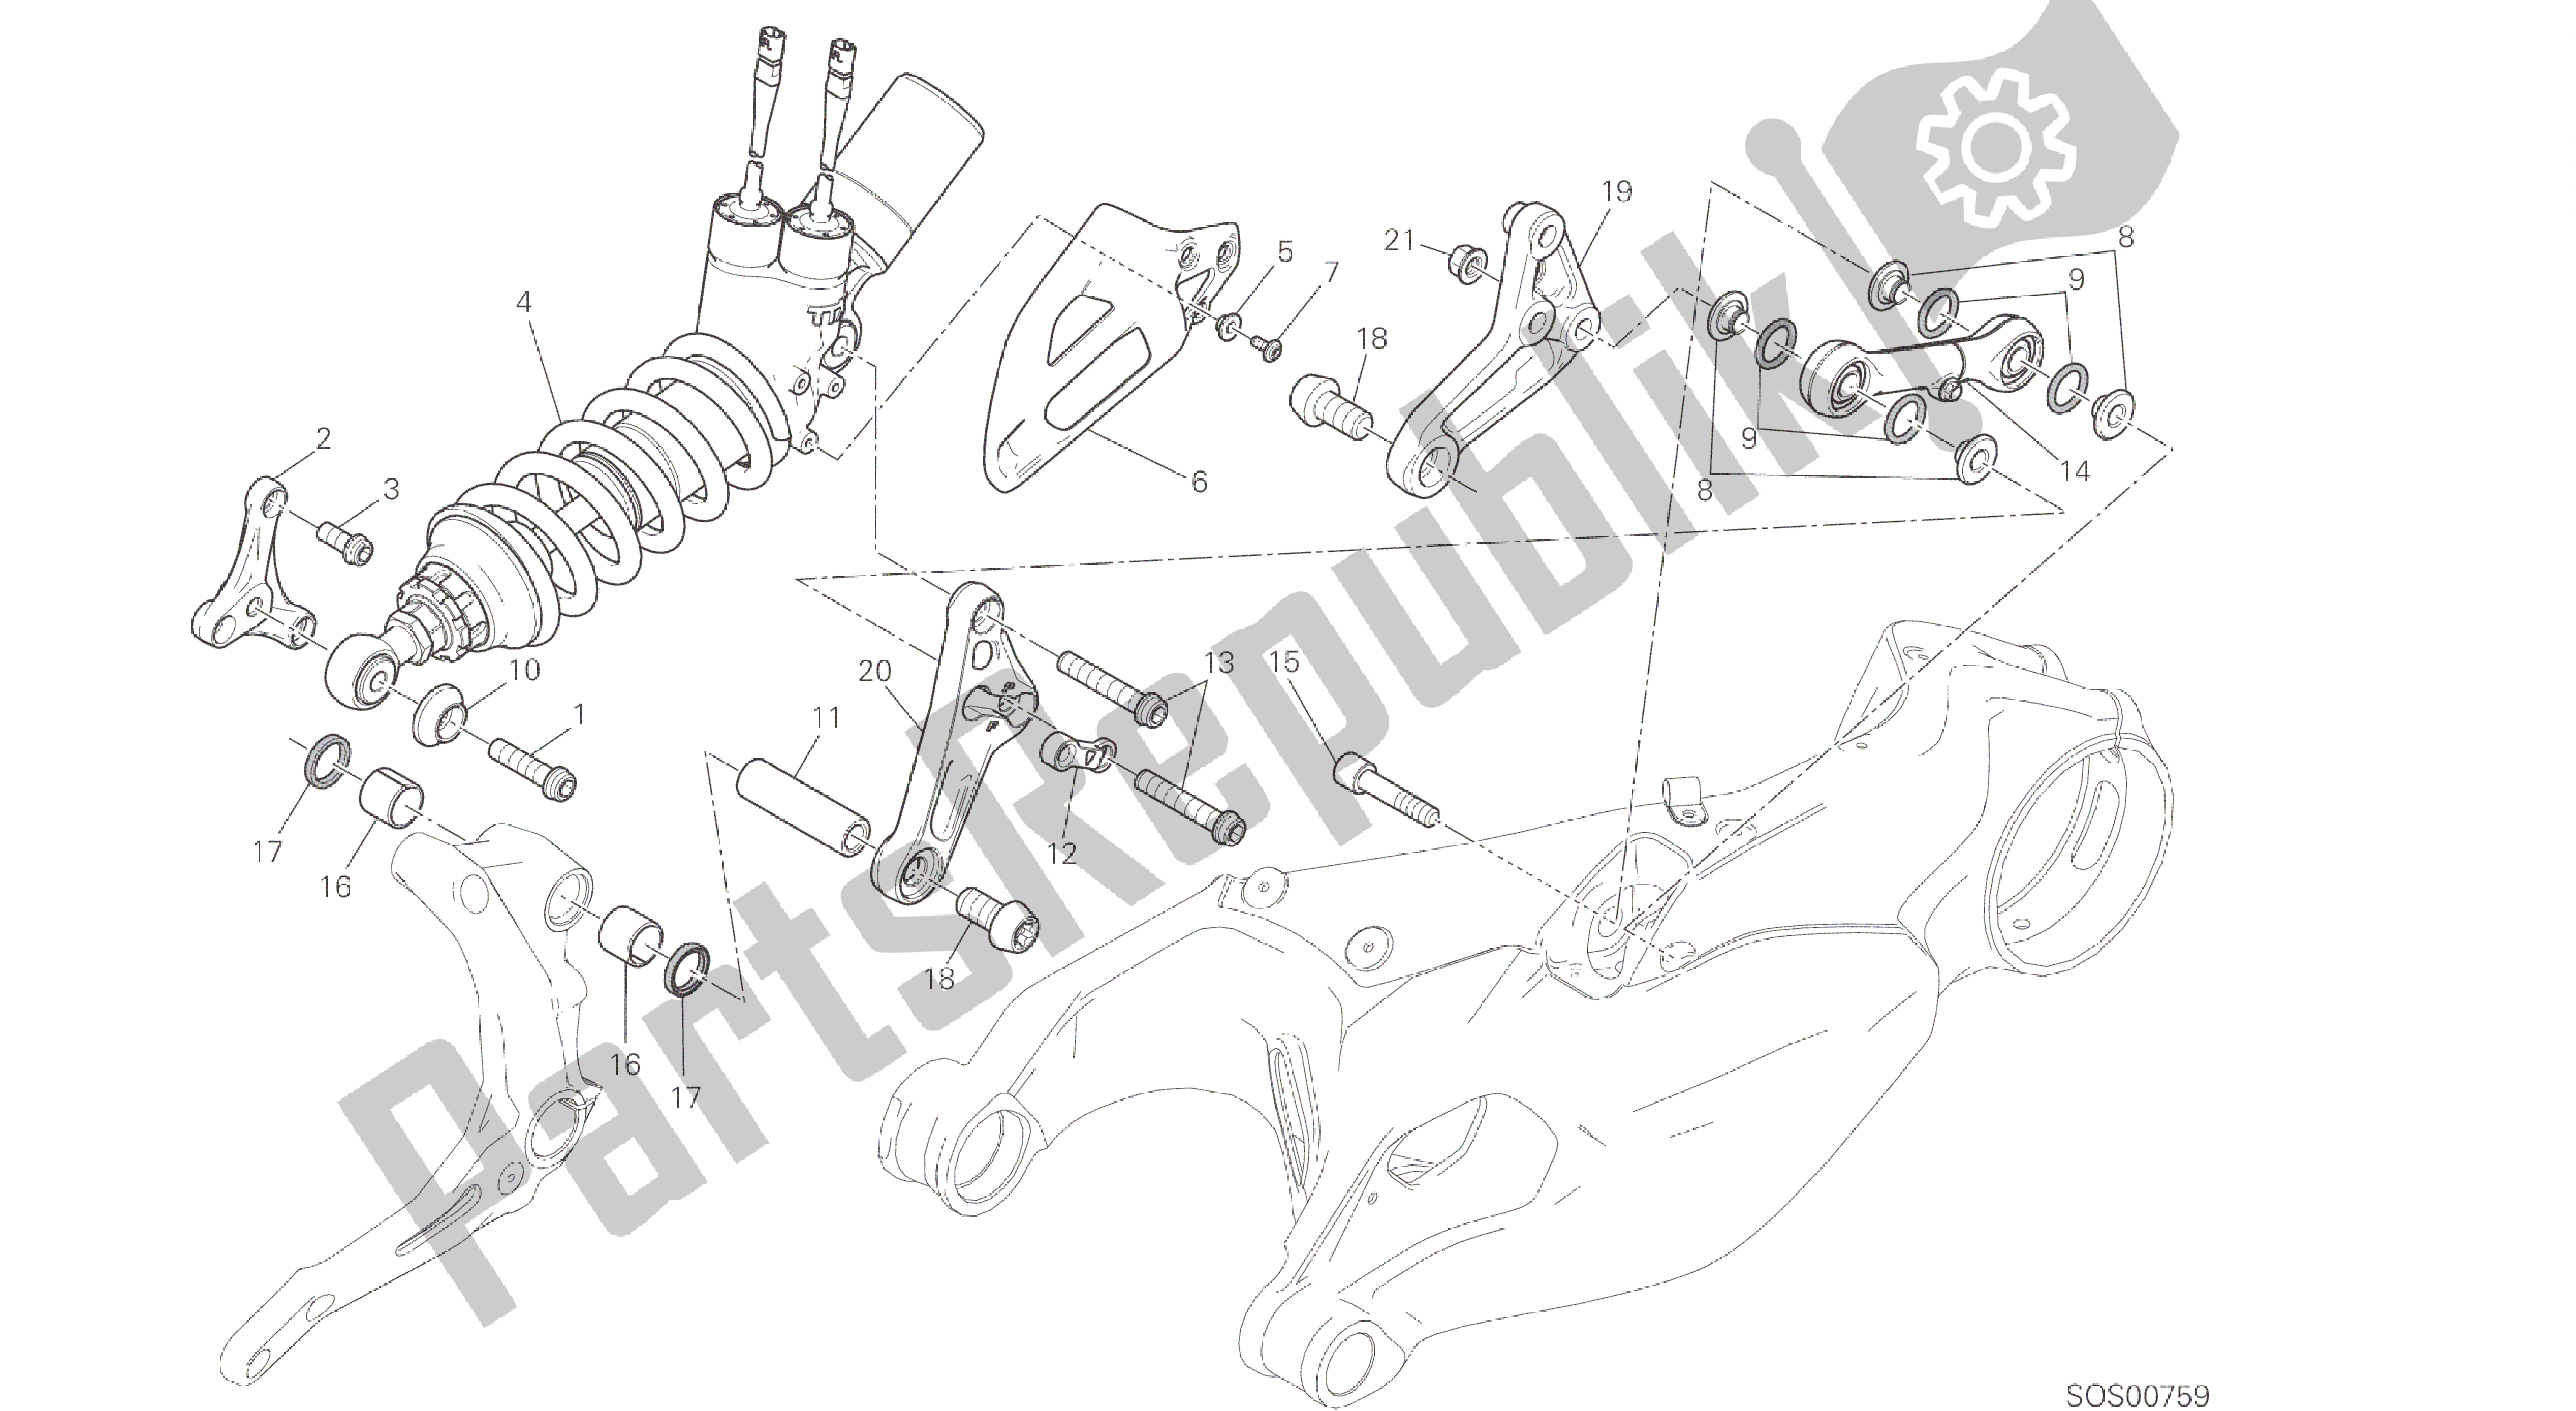 Alle onderdelen voor de Tekening 028 - Sospensione Posteriore [mod: 1299s; Xst: Aus, Eur, Fra, Jap, Twn] Groepsframe van de Ducati Panigale S ABS 1299 2016